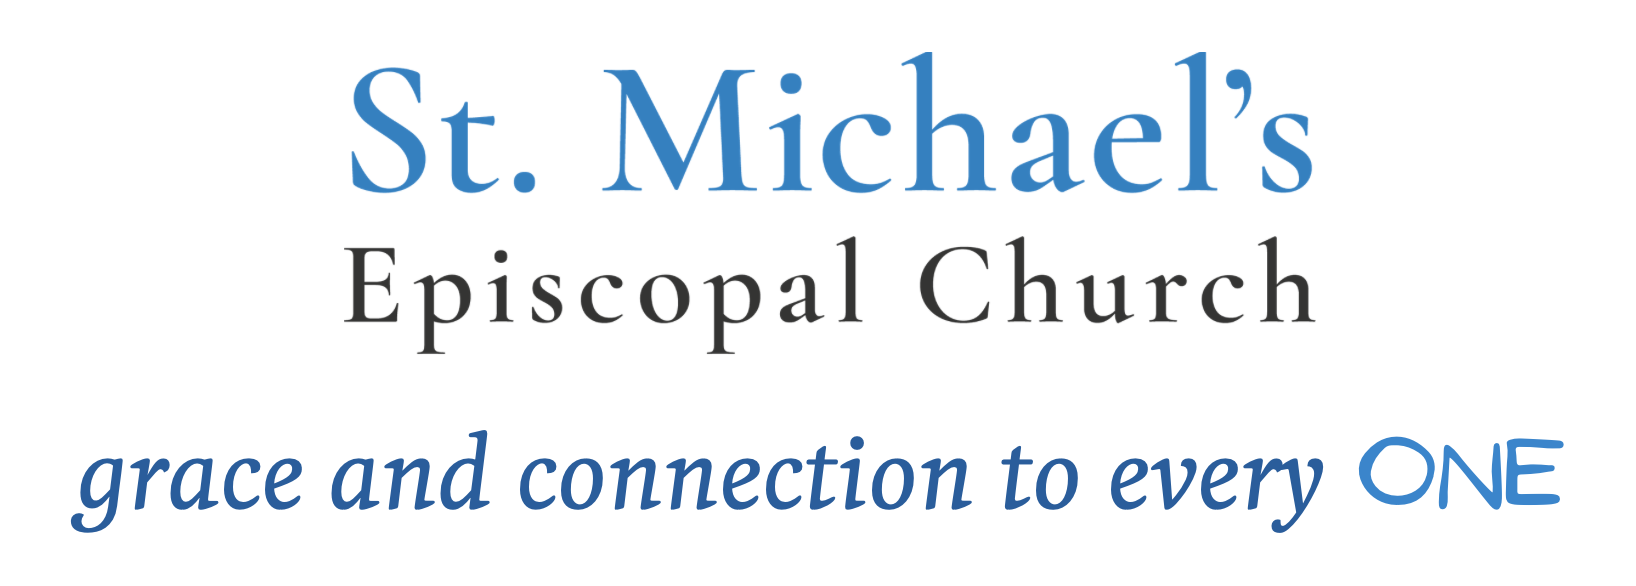 St.Michael's Episcopal Church logo